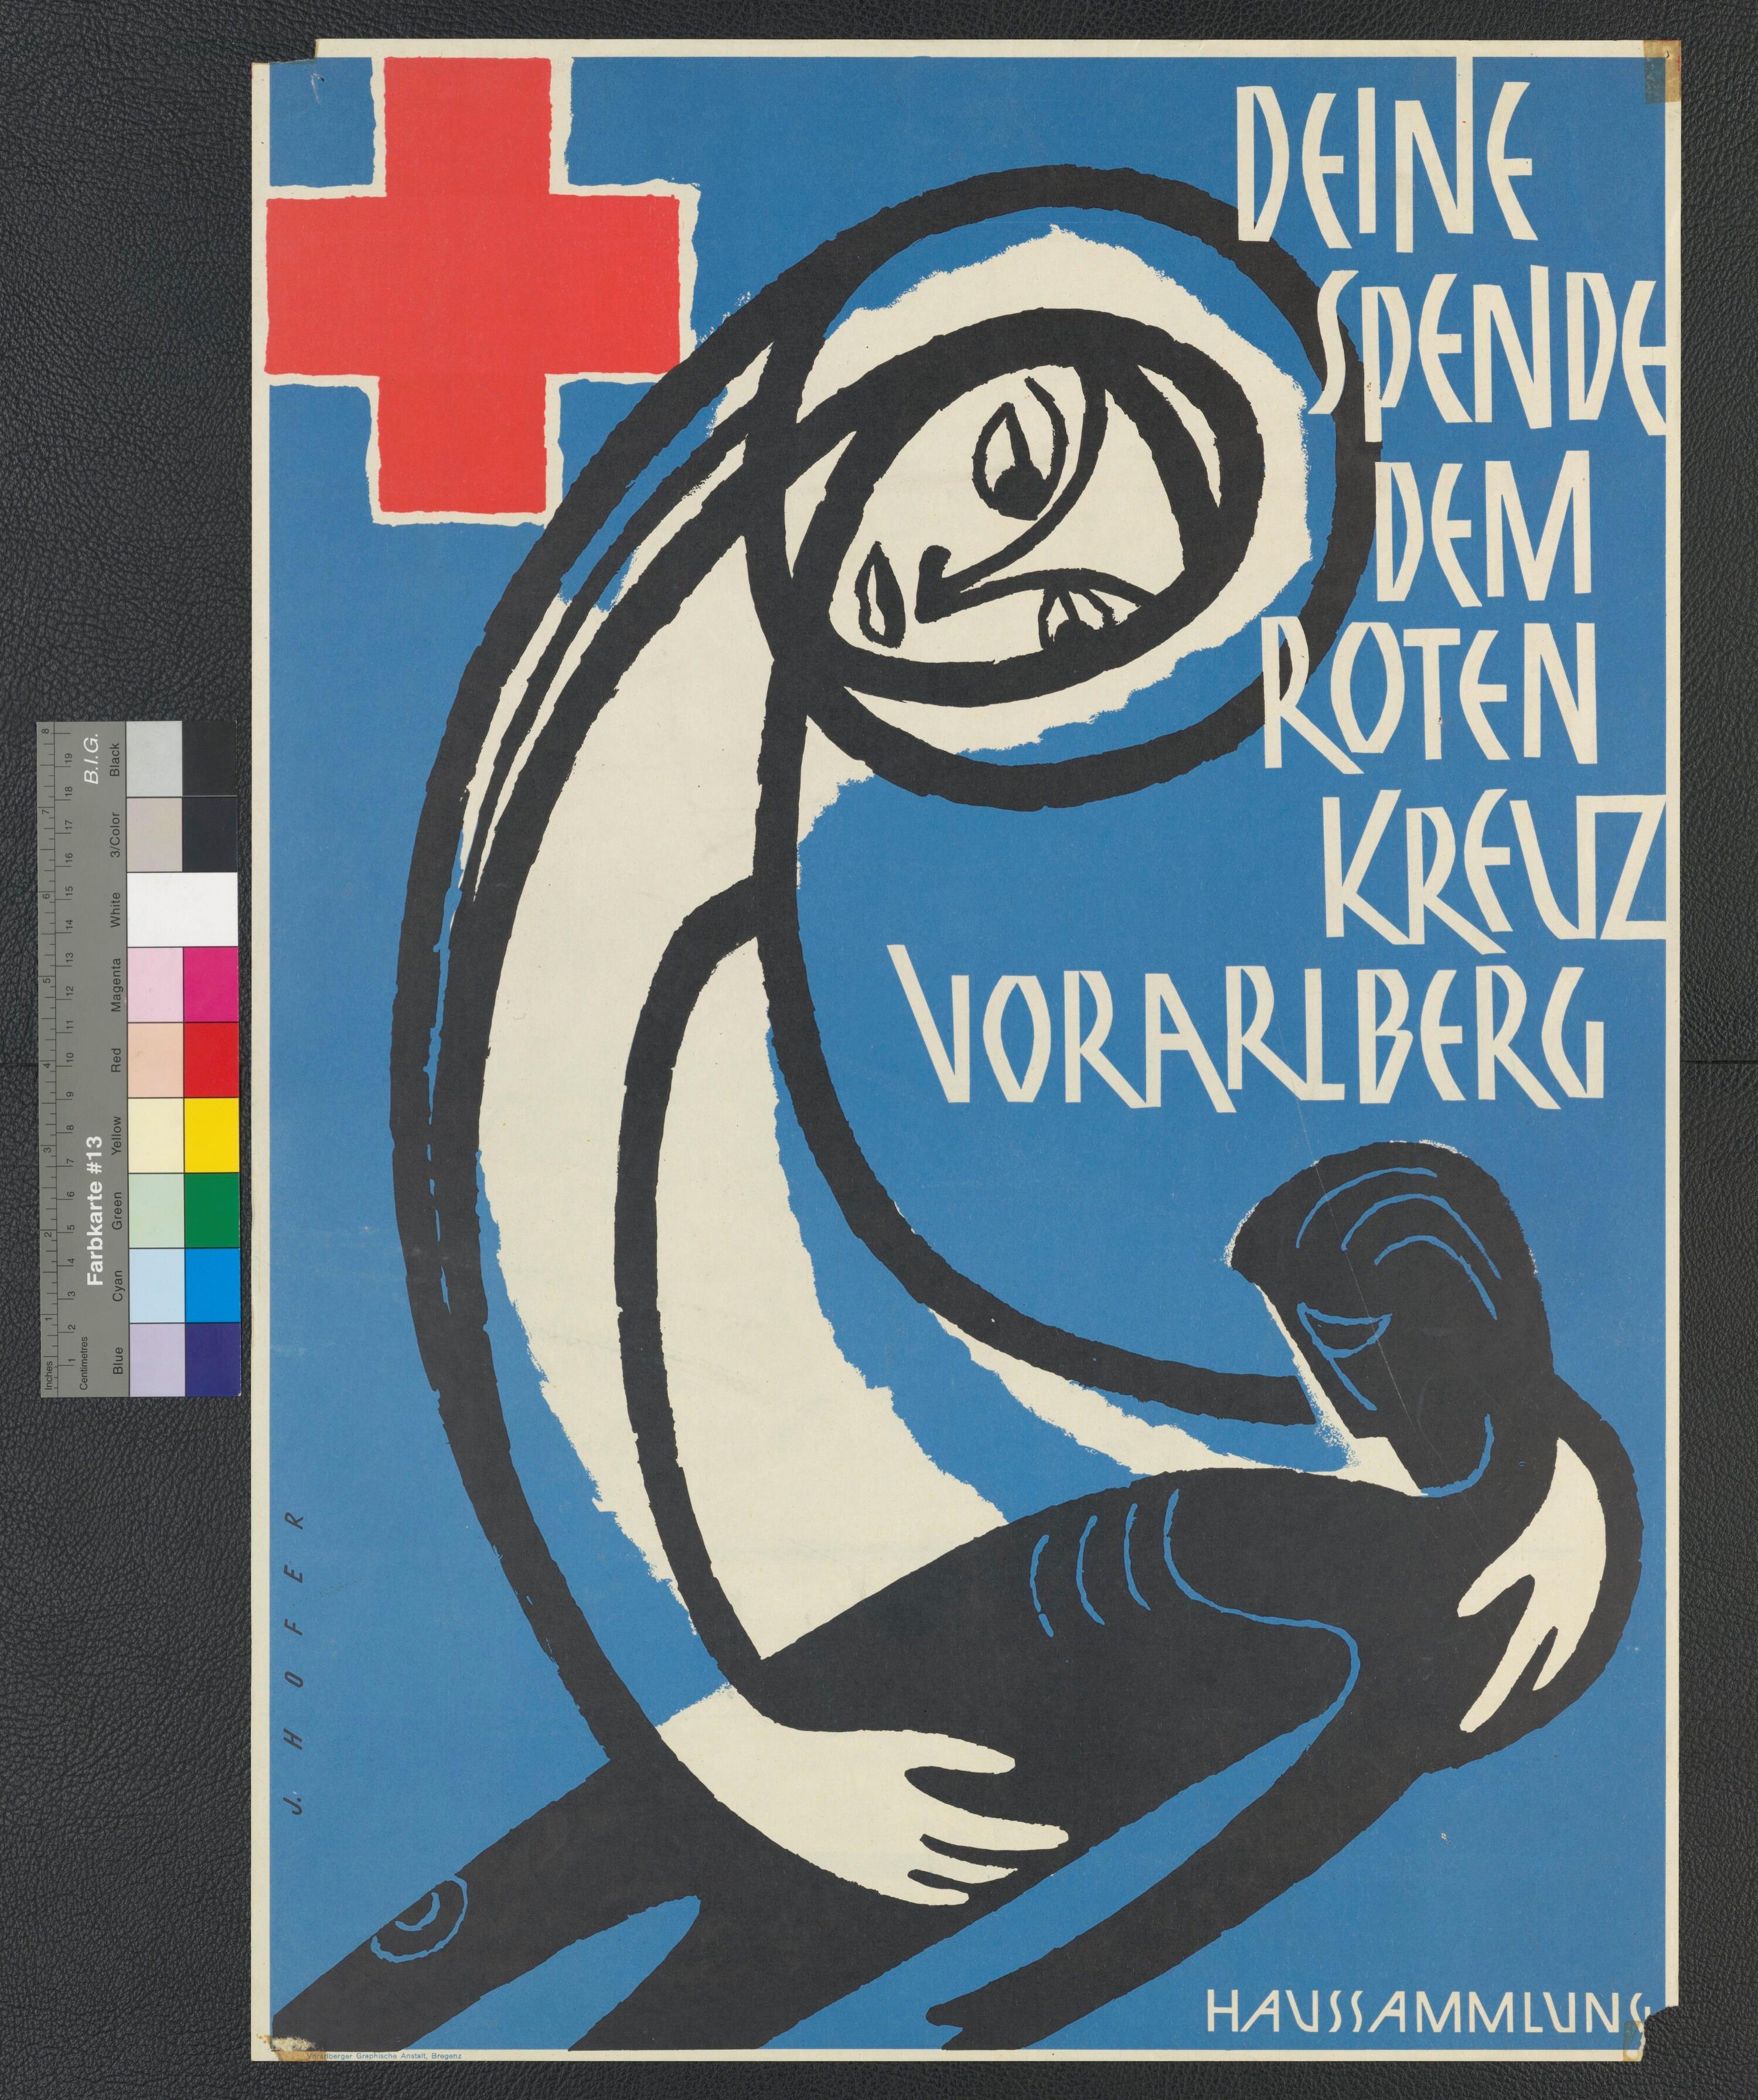 Plakat des Roten Kreuz Vorarlberg></div>


    <hr>
    <div class=